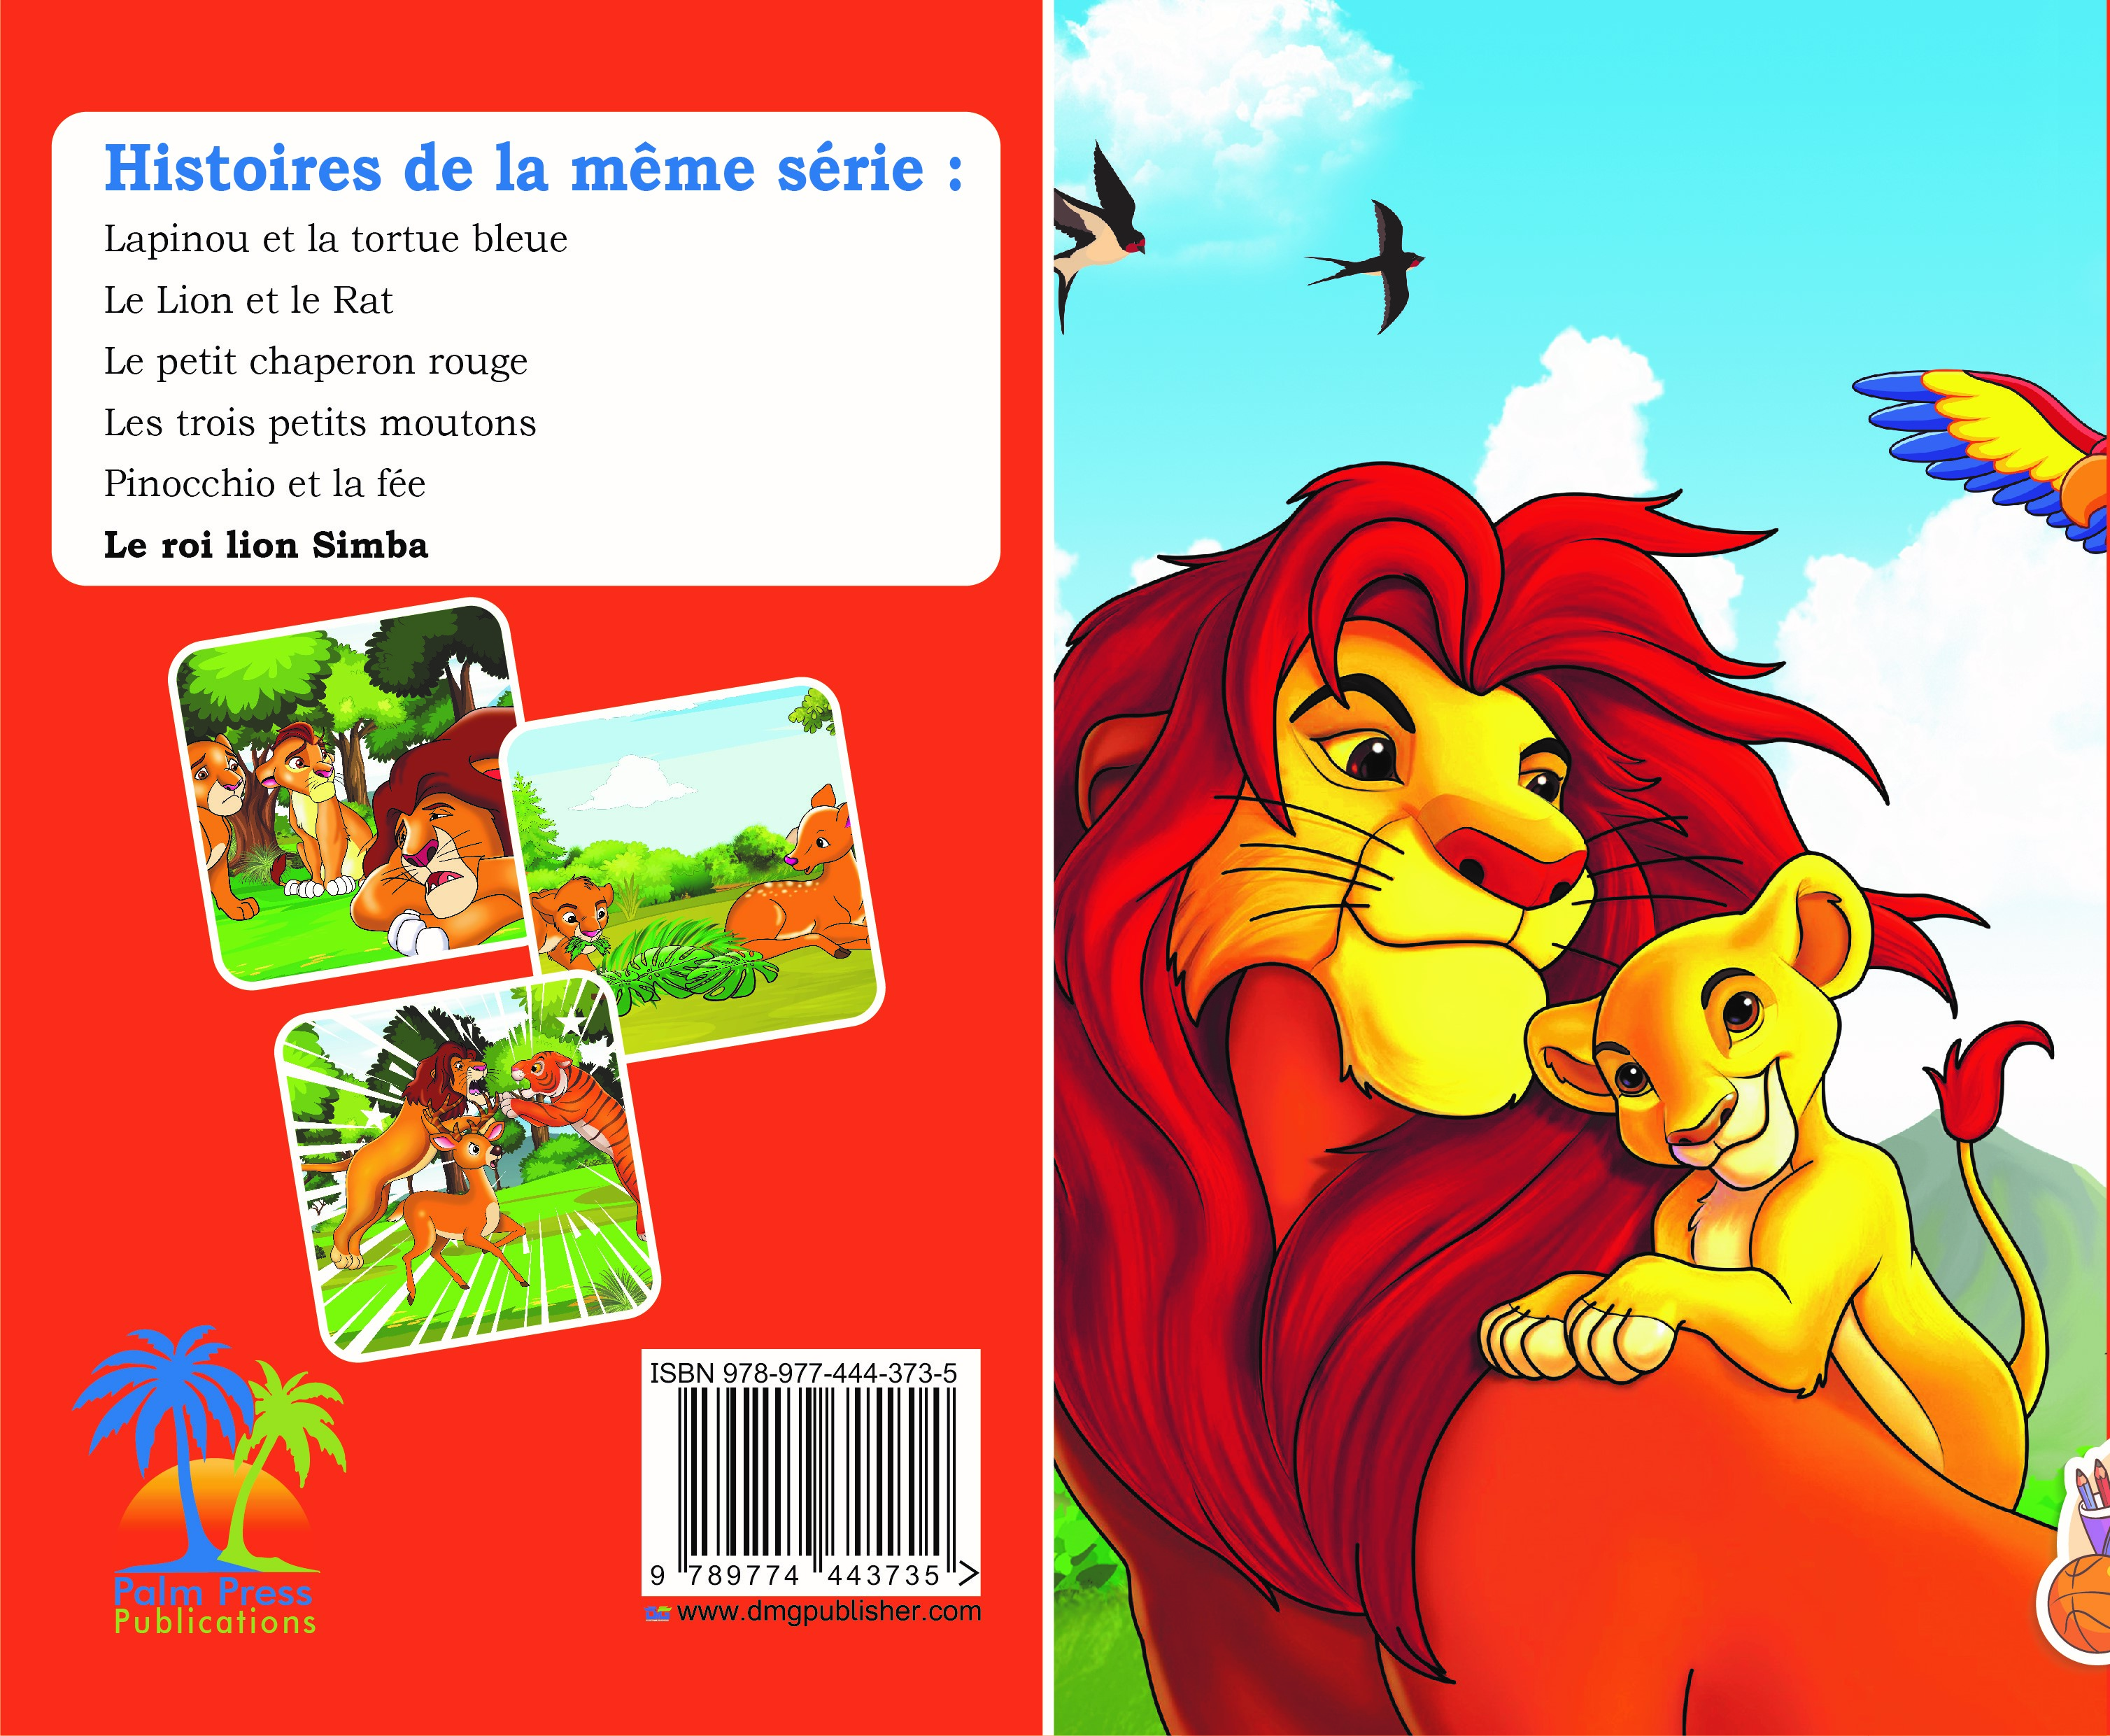 Le roi lion Simba 6